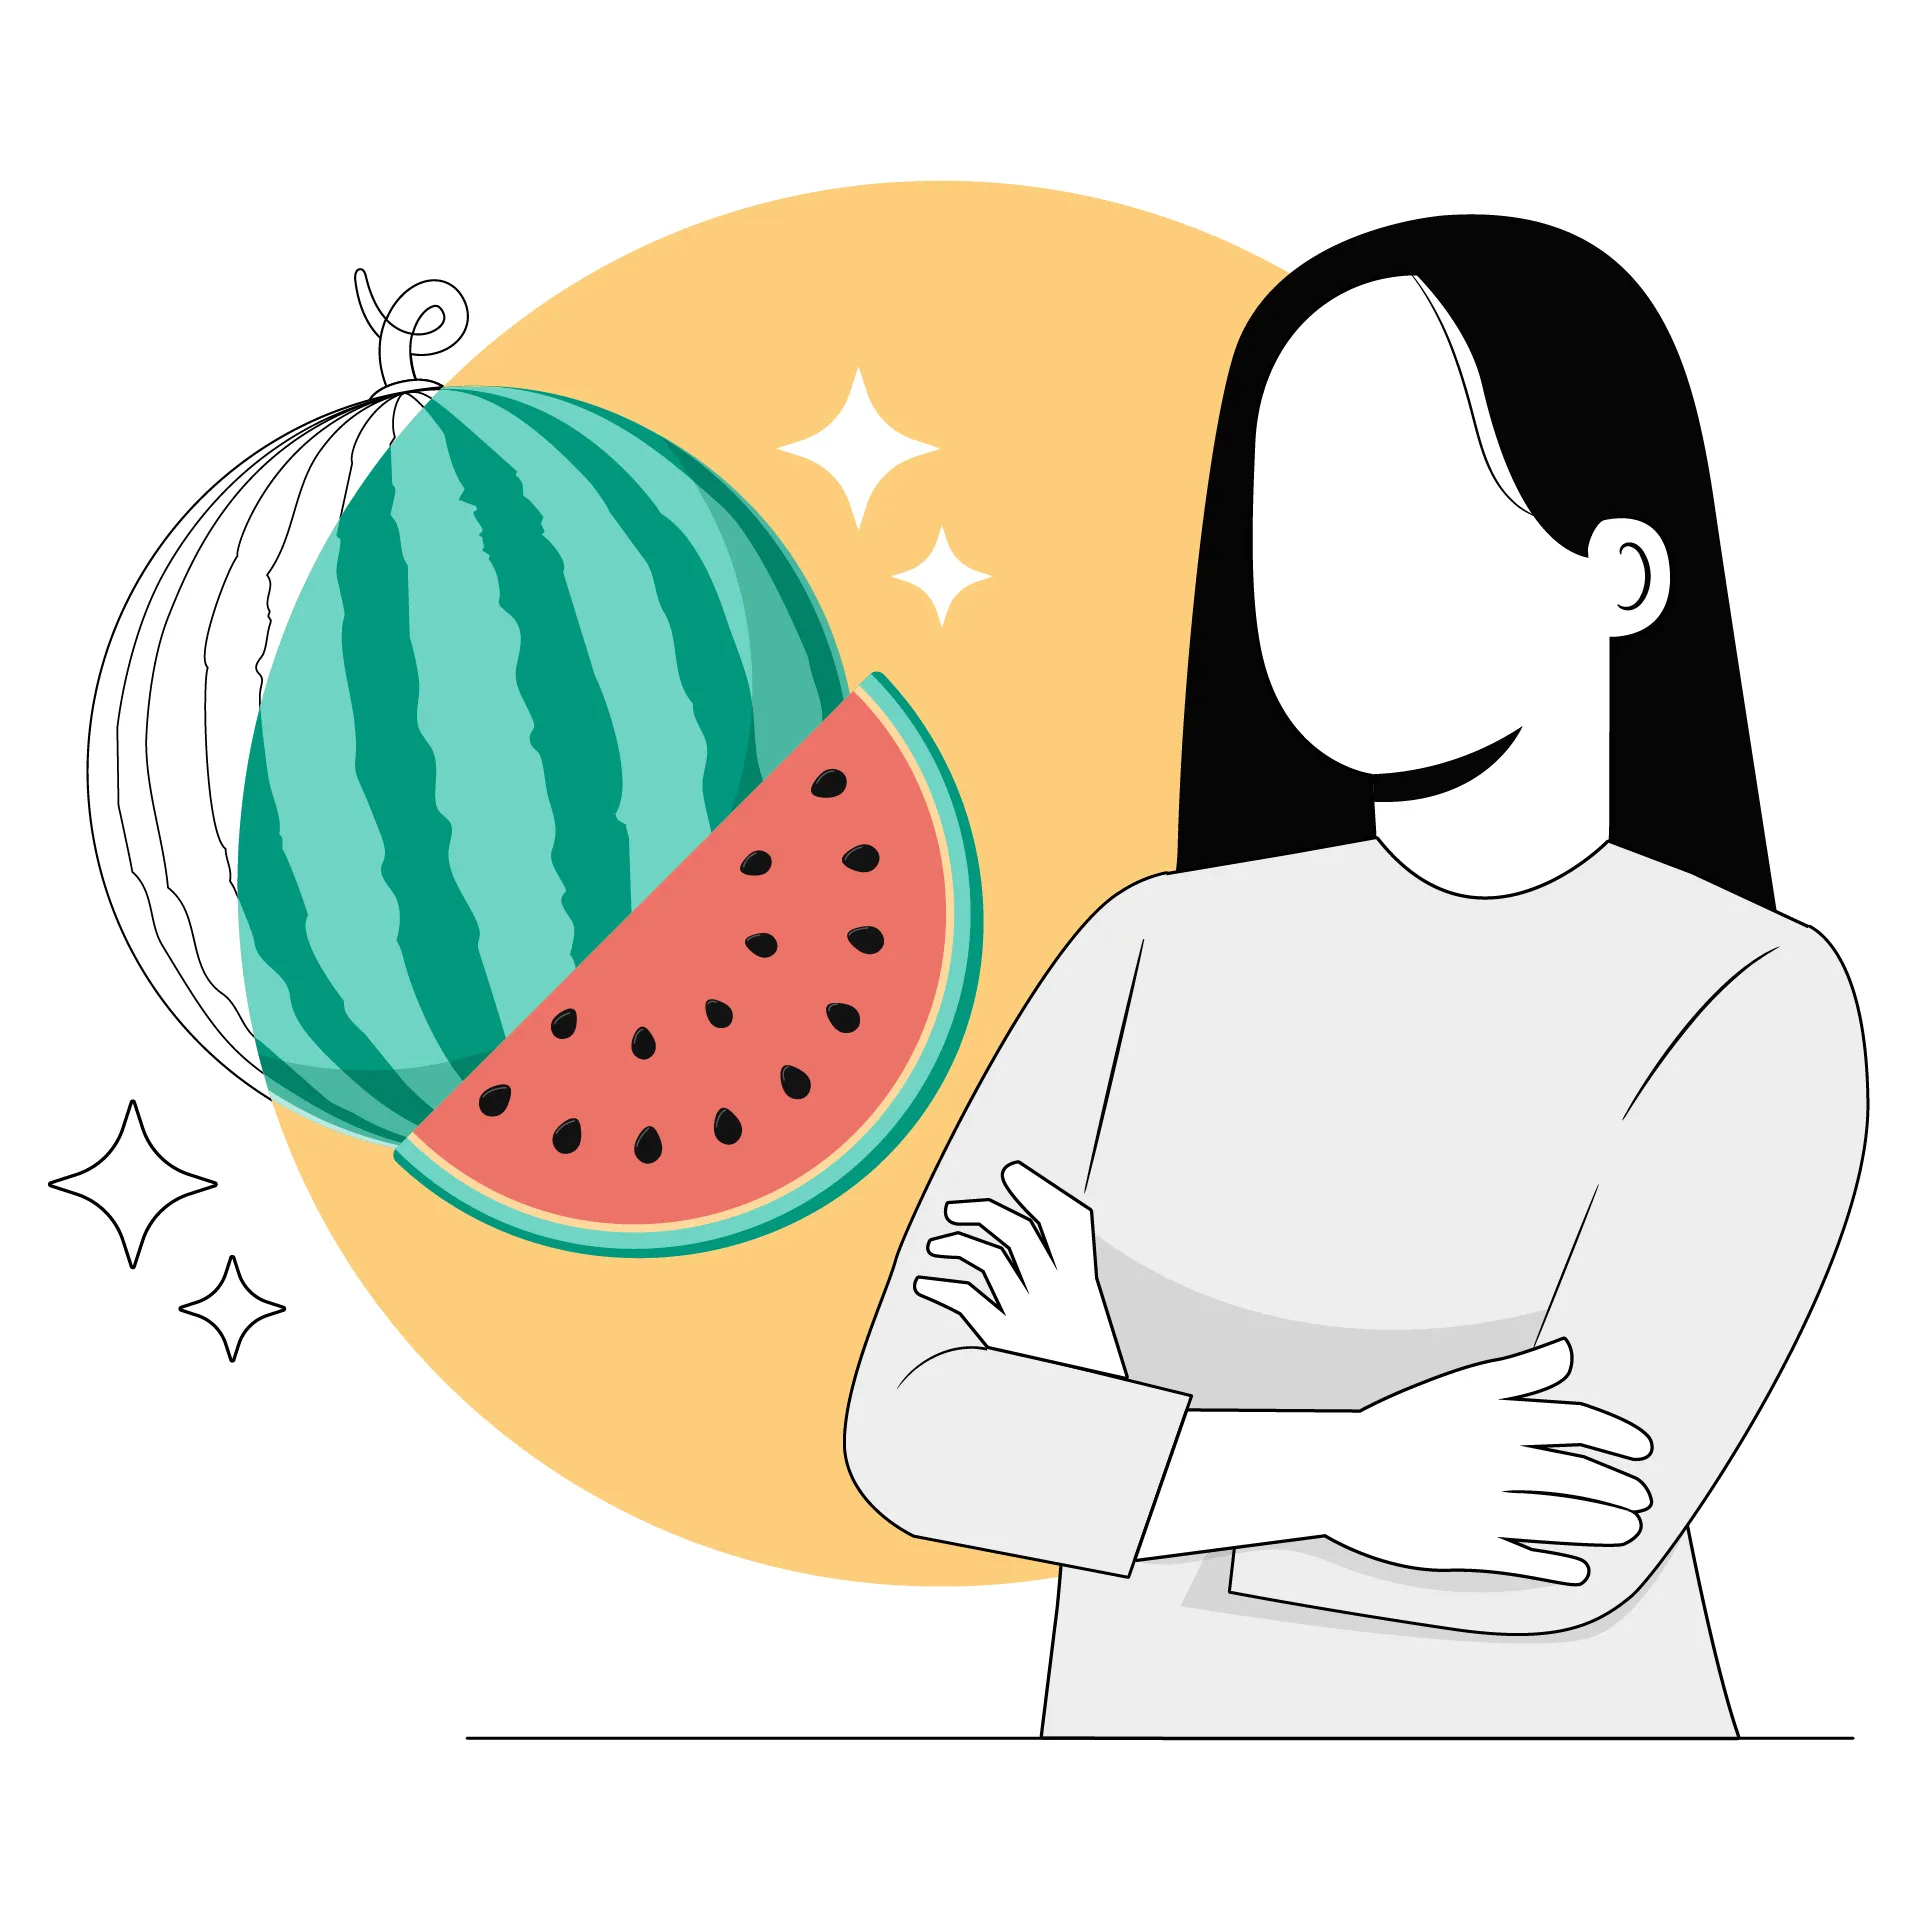 6 Watermelon Seeds Benefits - 30